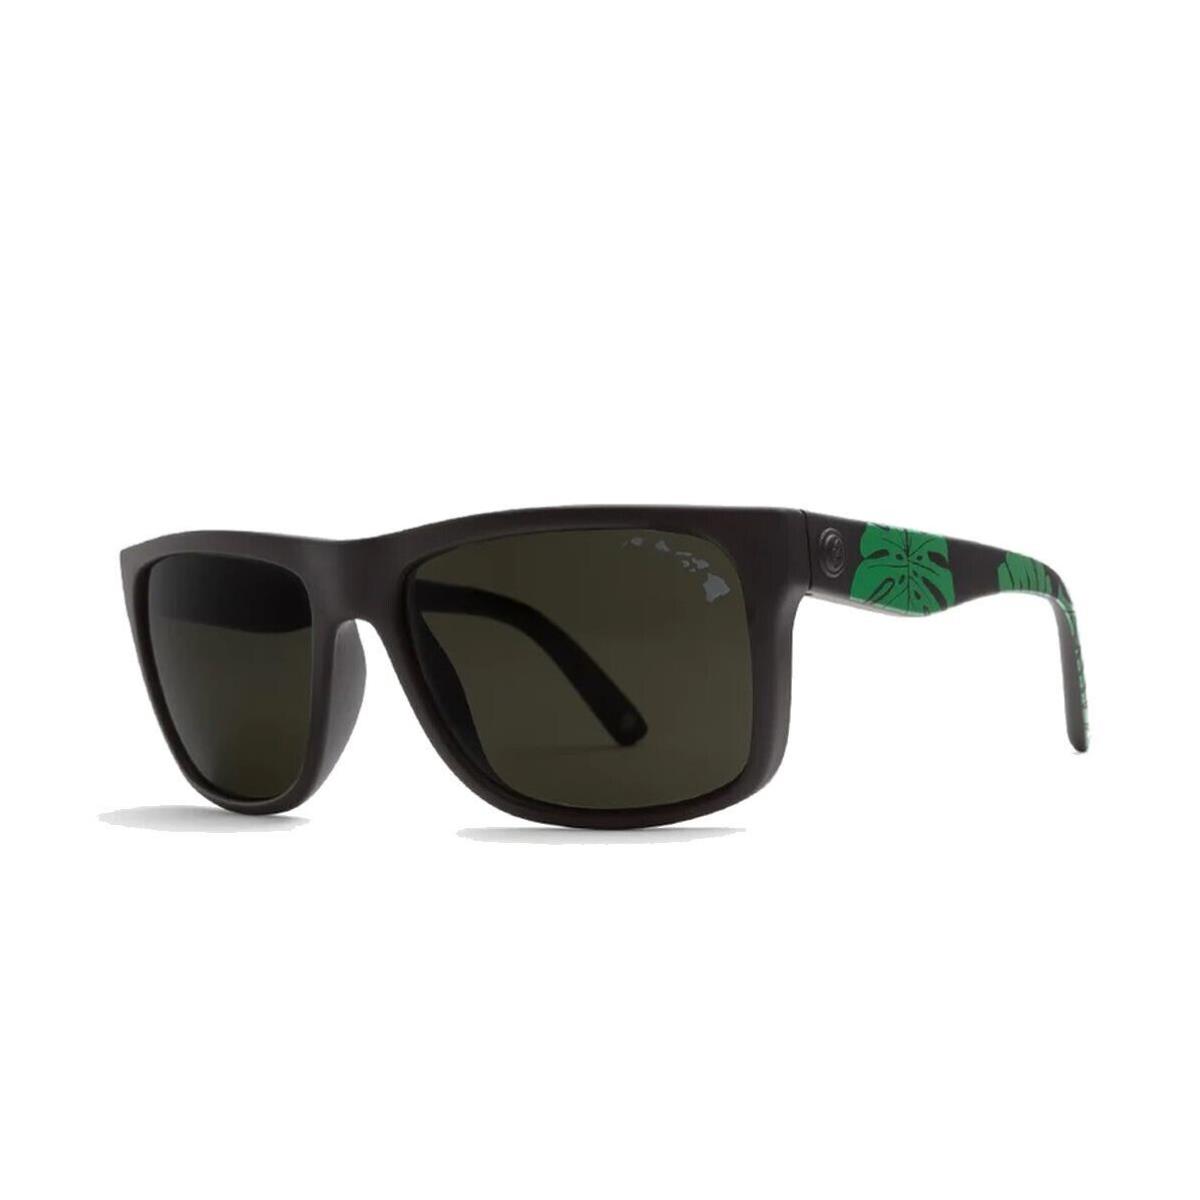 Electric Swingarm XL Sunglasses Hawaii Black Green with Grey Polarized Lens